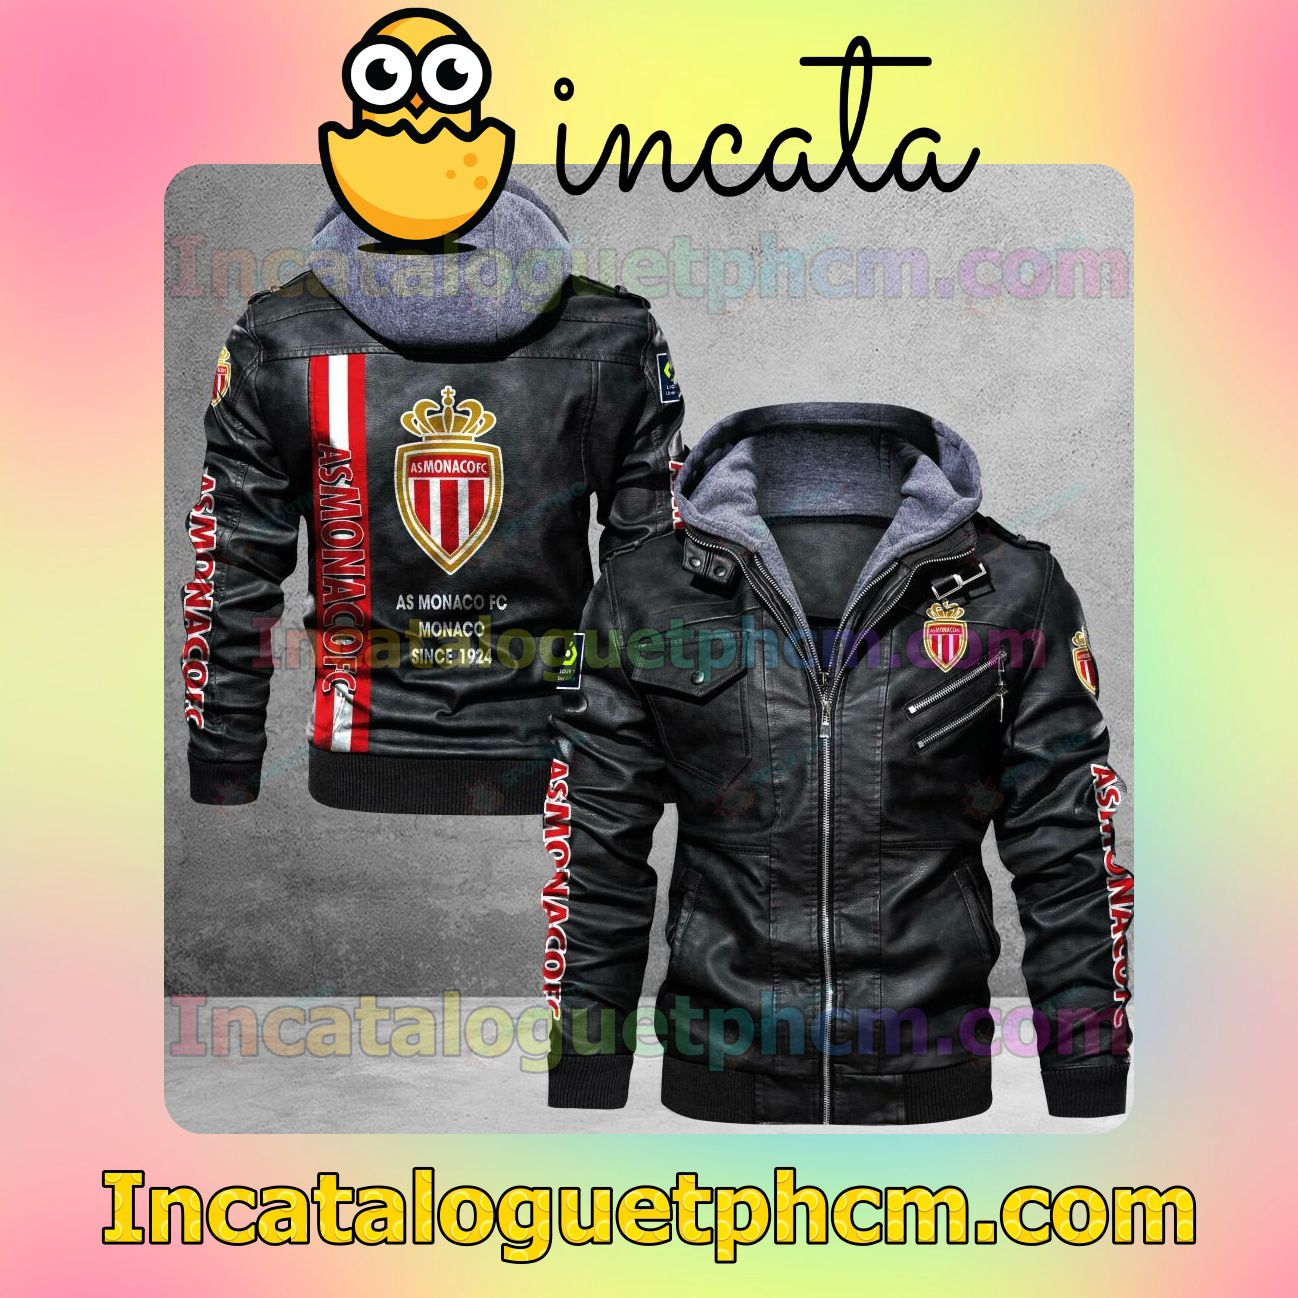 AS Monaco Brand Uniform Leather Jacket